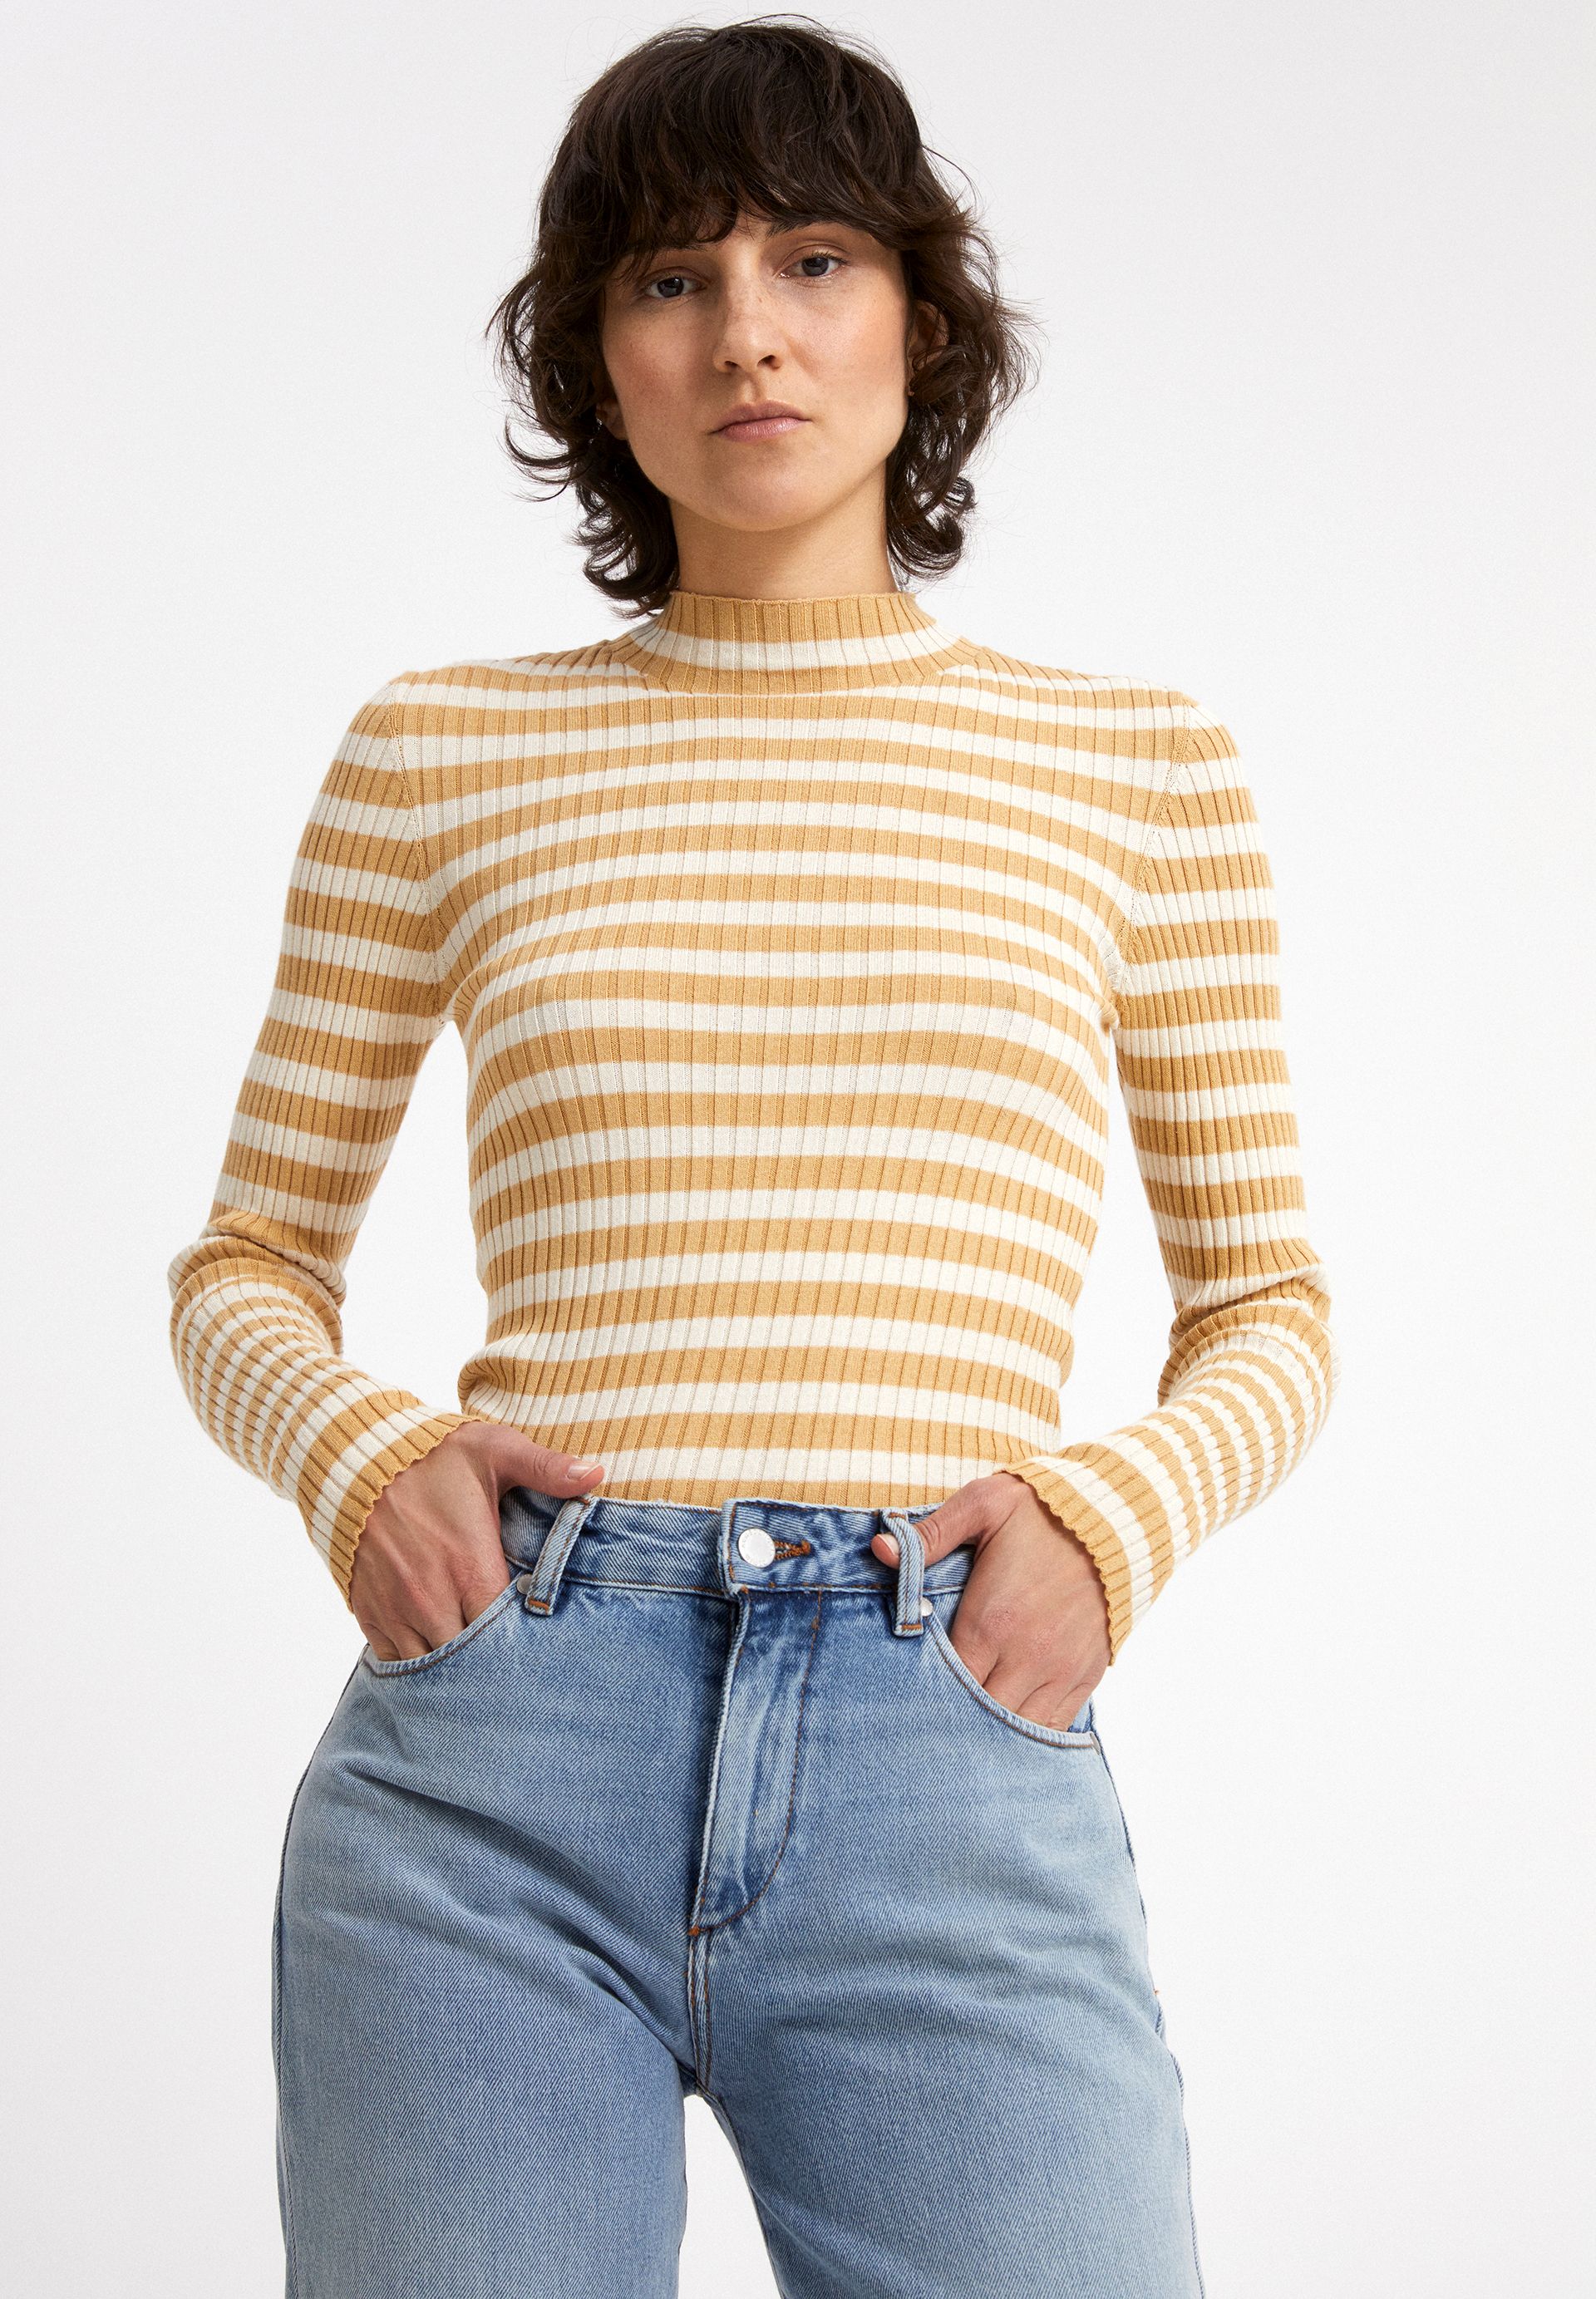 Damen-Pullover ALAANI STRIPED golden harvest/ oatmilk